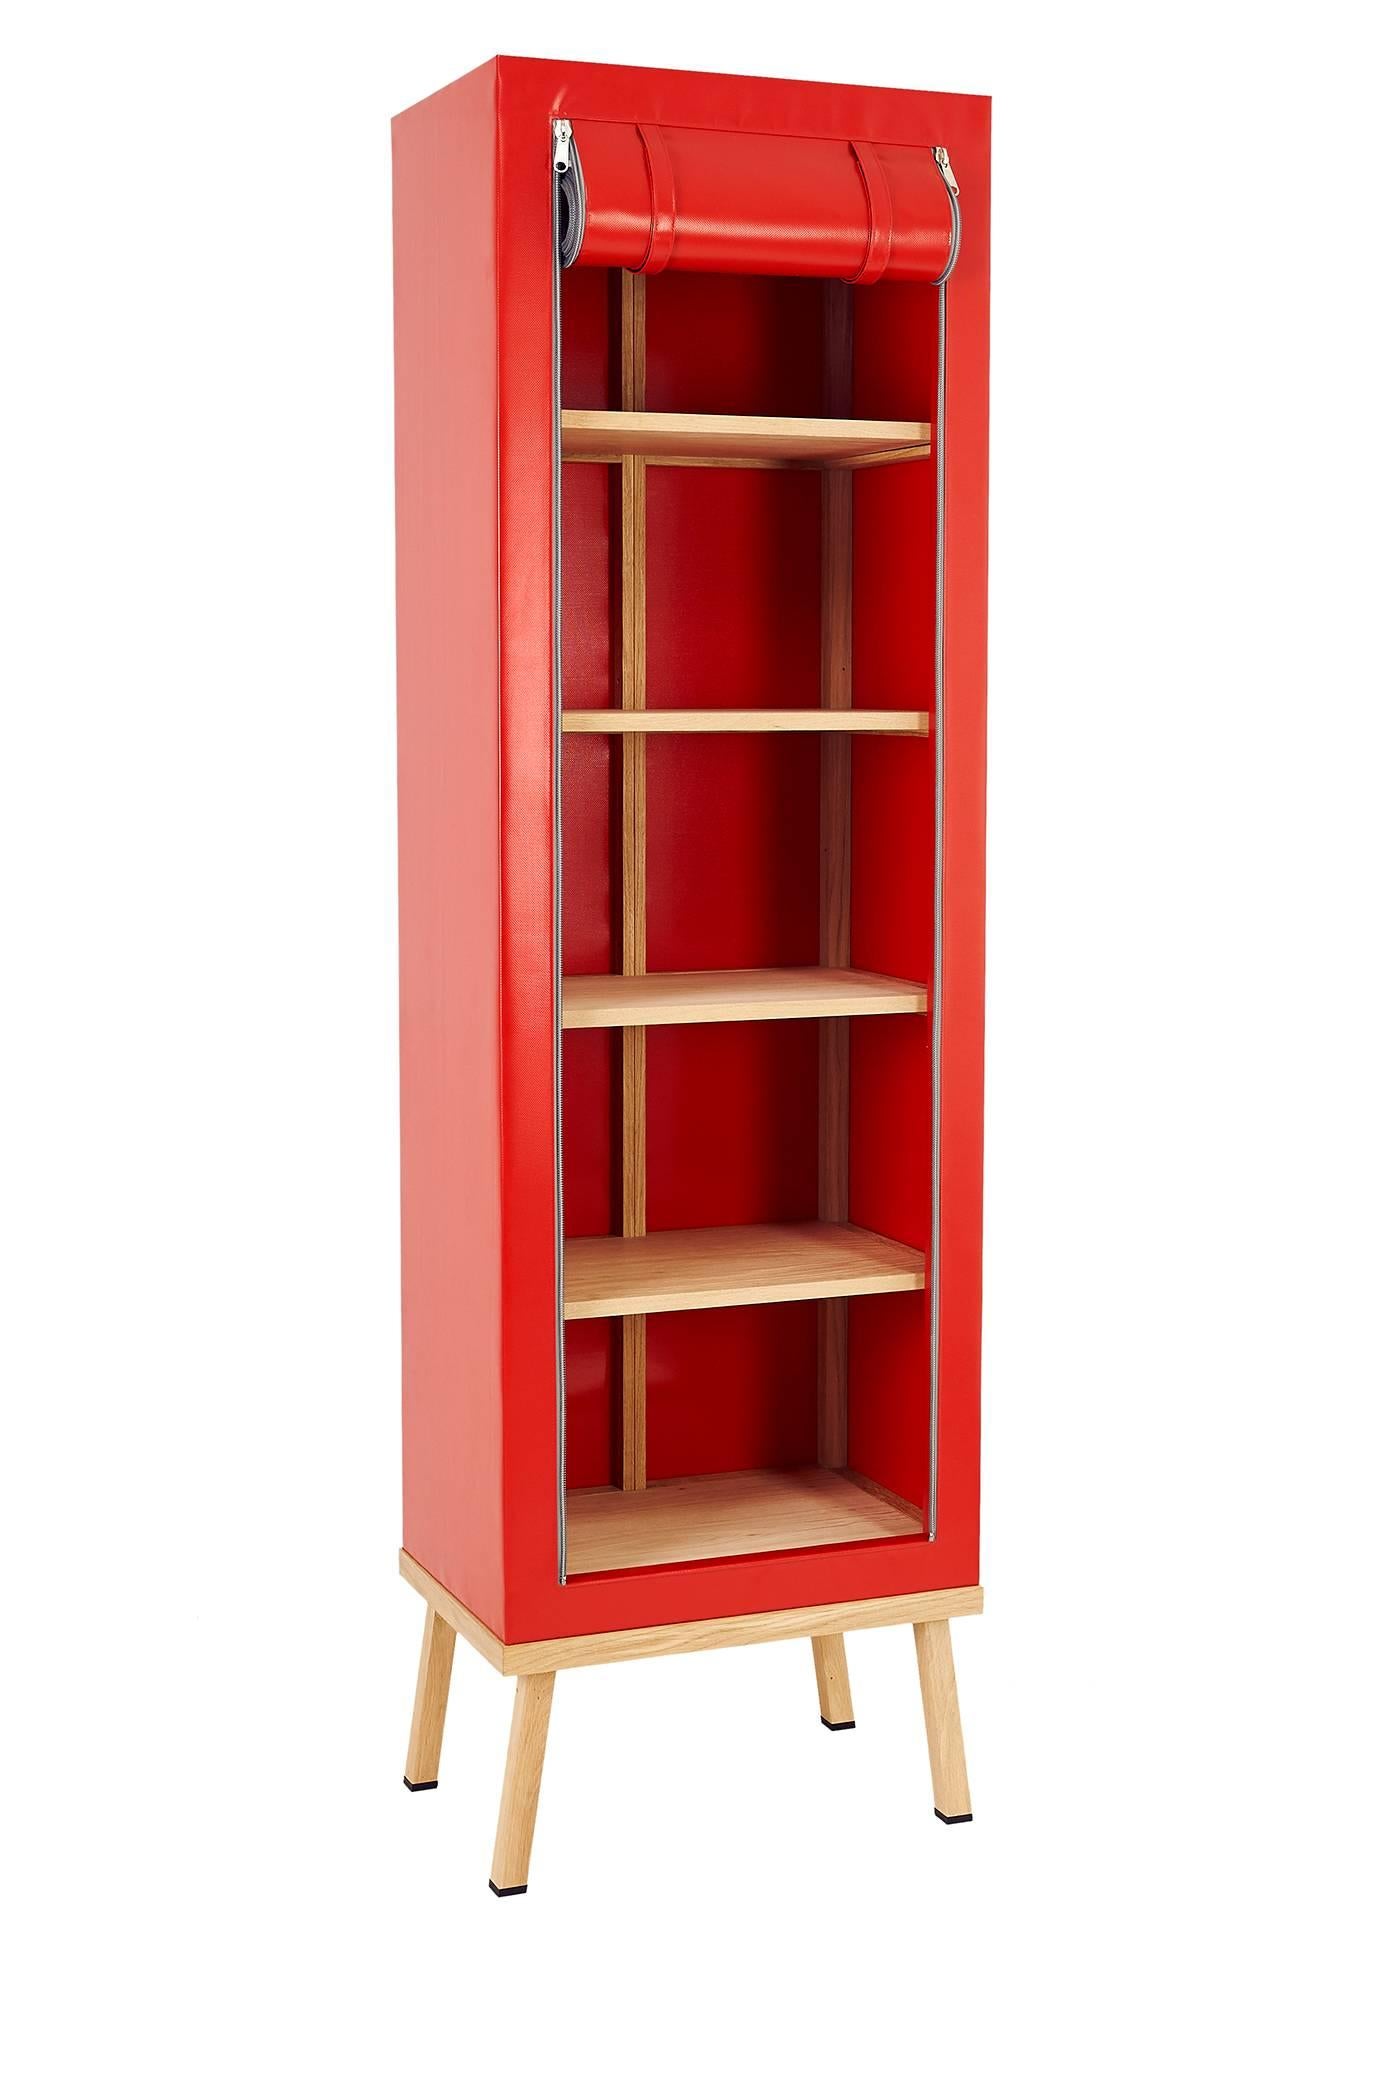 Visser and Meijwaard Truecolors Cabinet in Red PVC Cloth with Zipper Opening

Designed by Visser en Meijwaard 
Contemporary, Netherlands, 2015
PVC cloth, oakwood, rubber
H 78.75 in, W 23.75 in, D 15.75 in 

Lead time 8-10 weeks. 

Available in